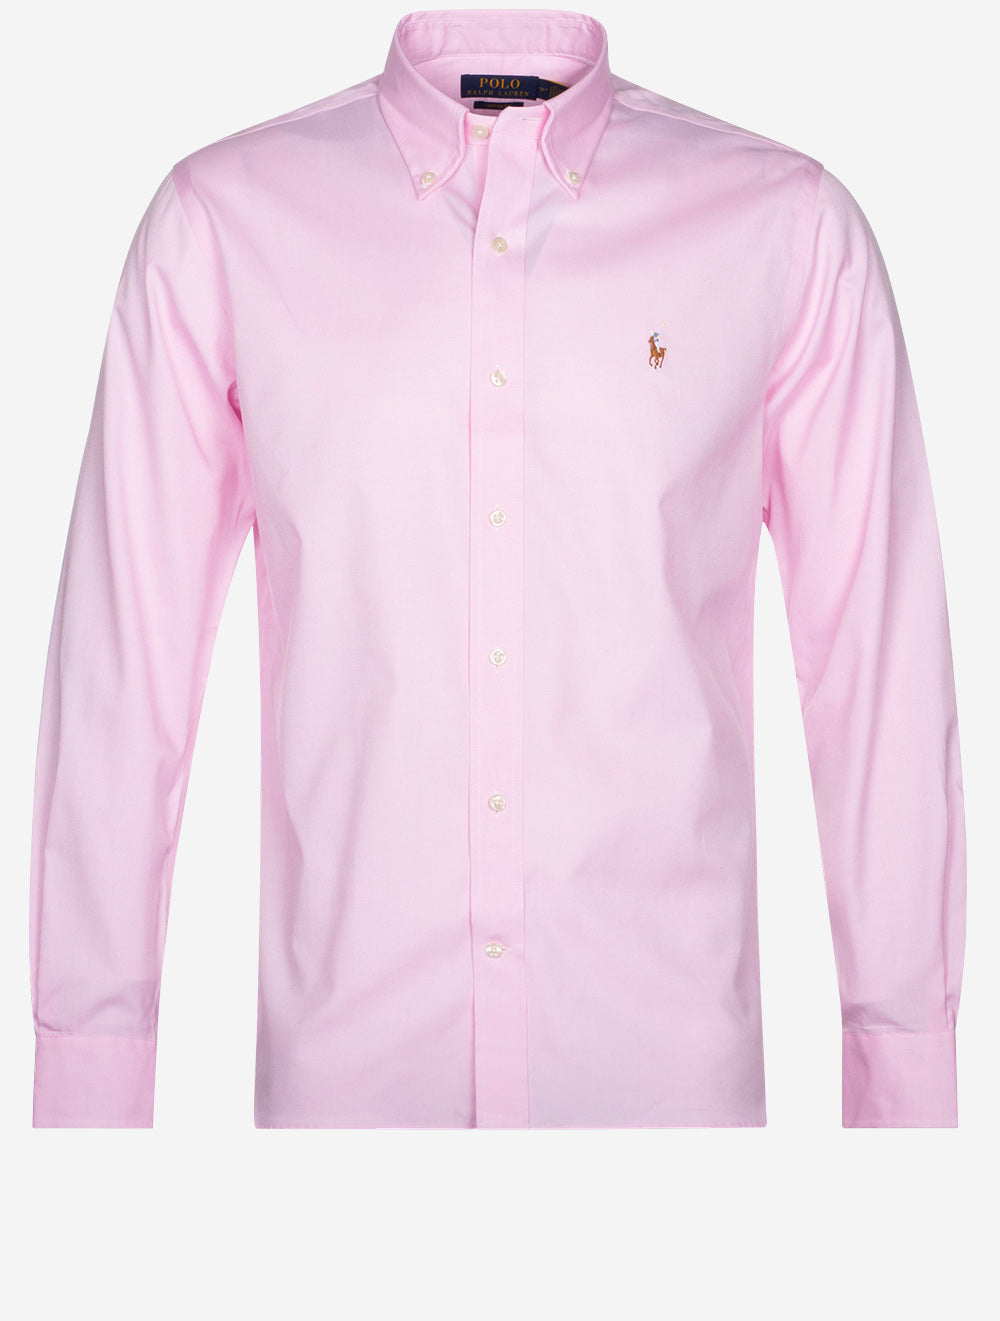 Buttondown Plain Stretch Shirt Pink White